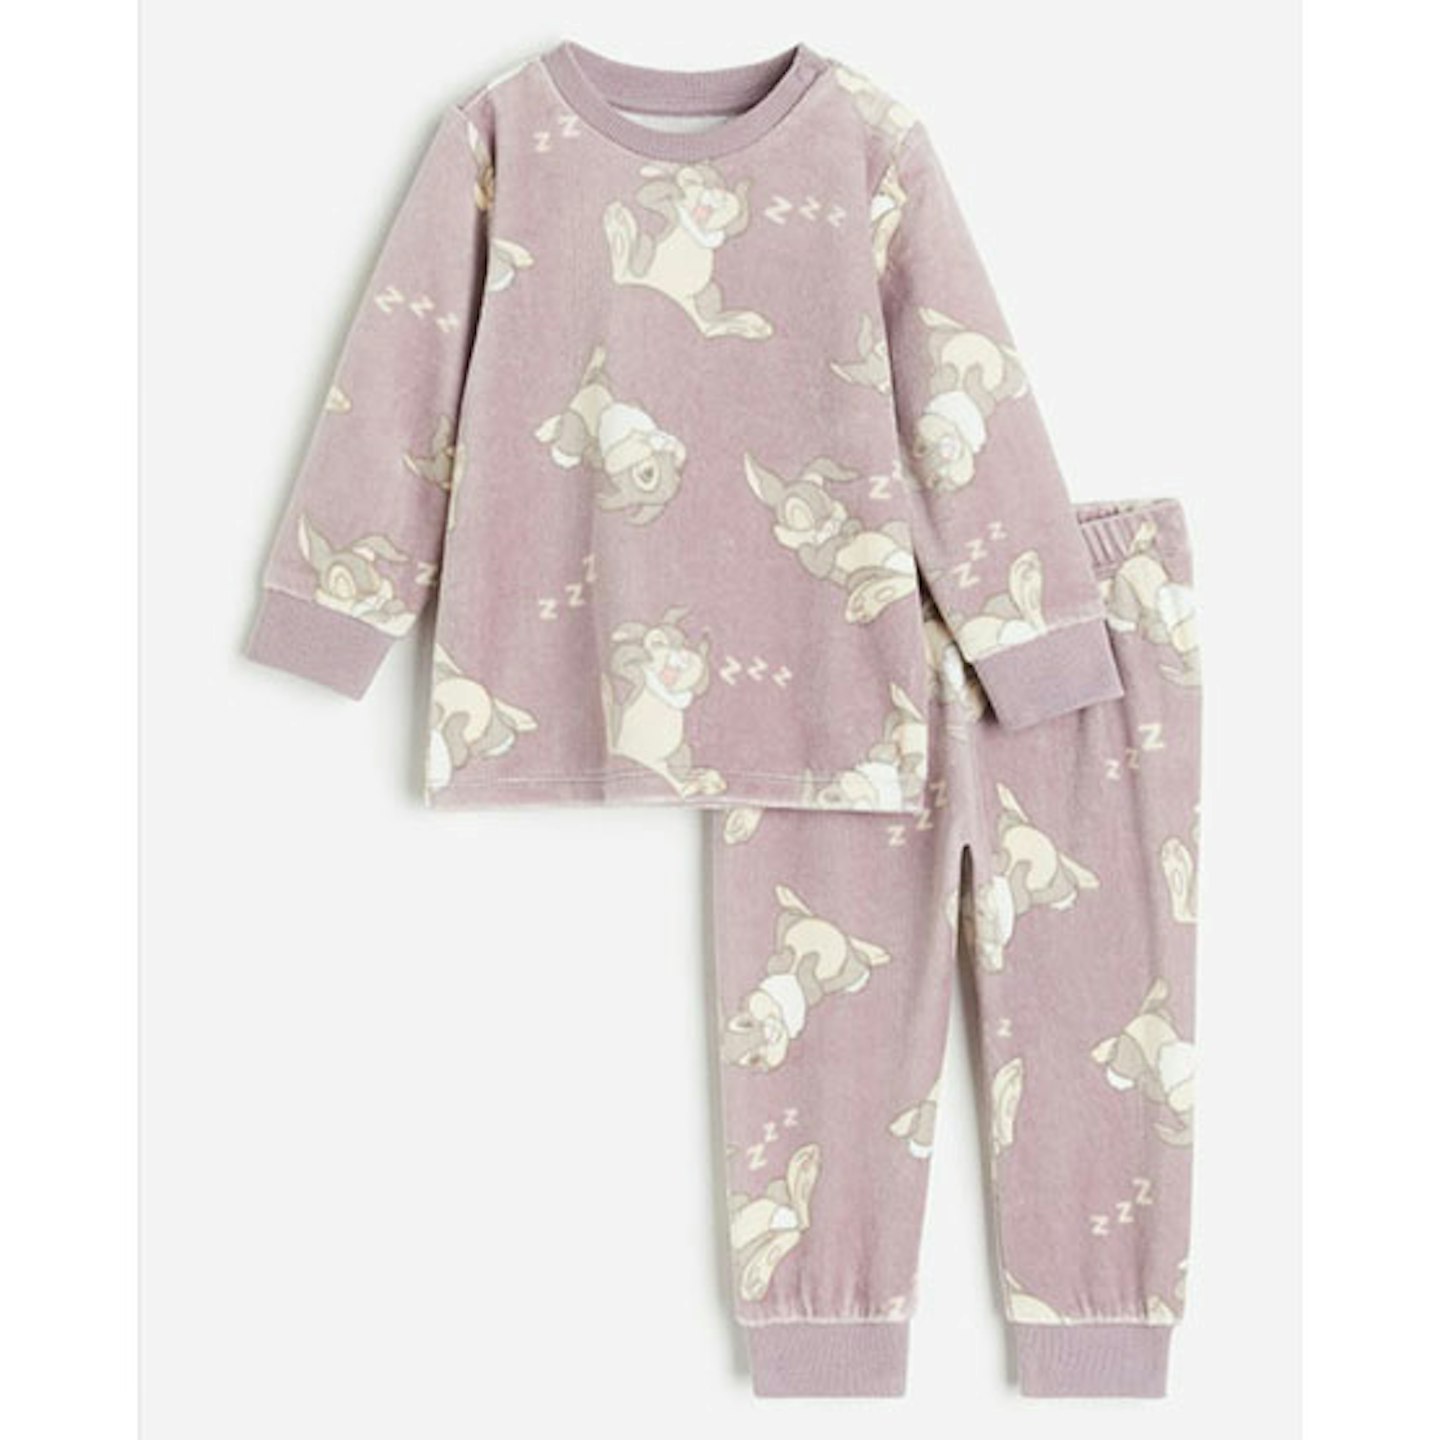 Thumper pyjamas